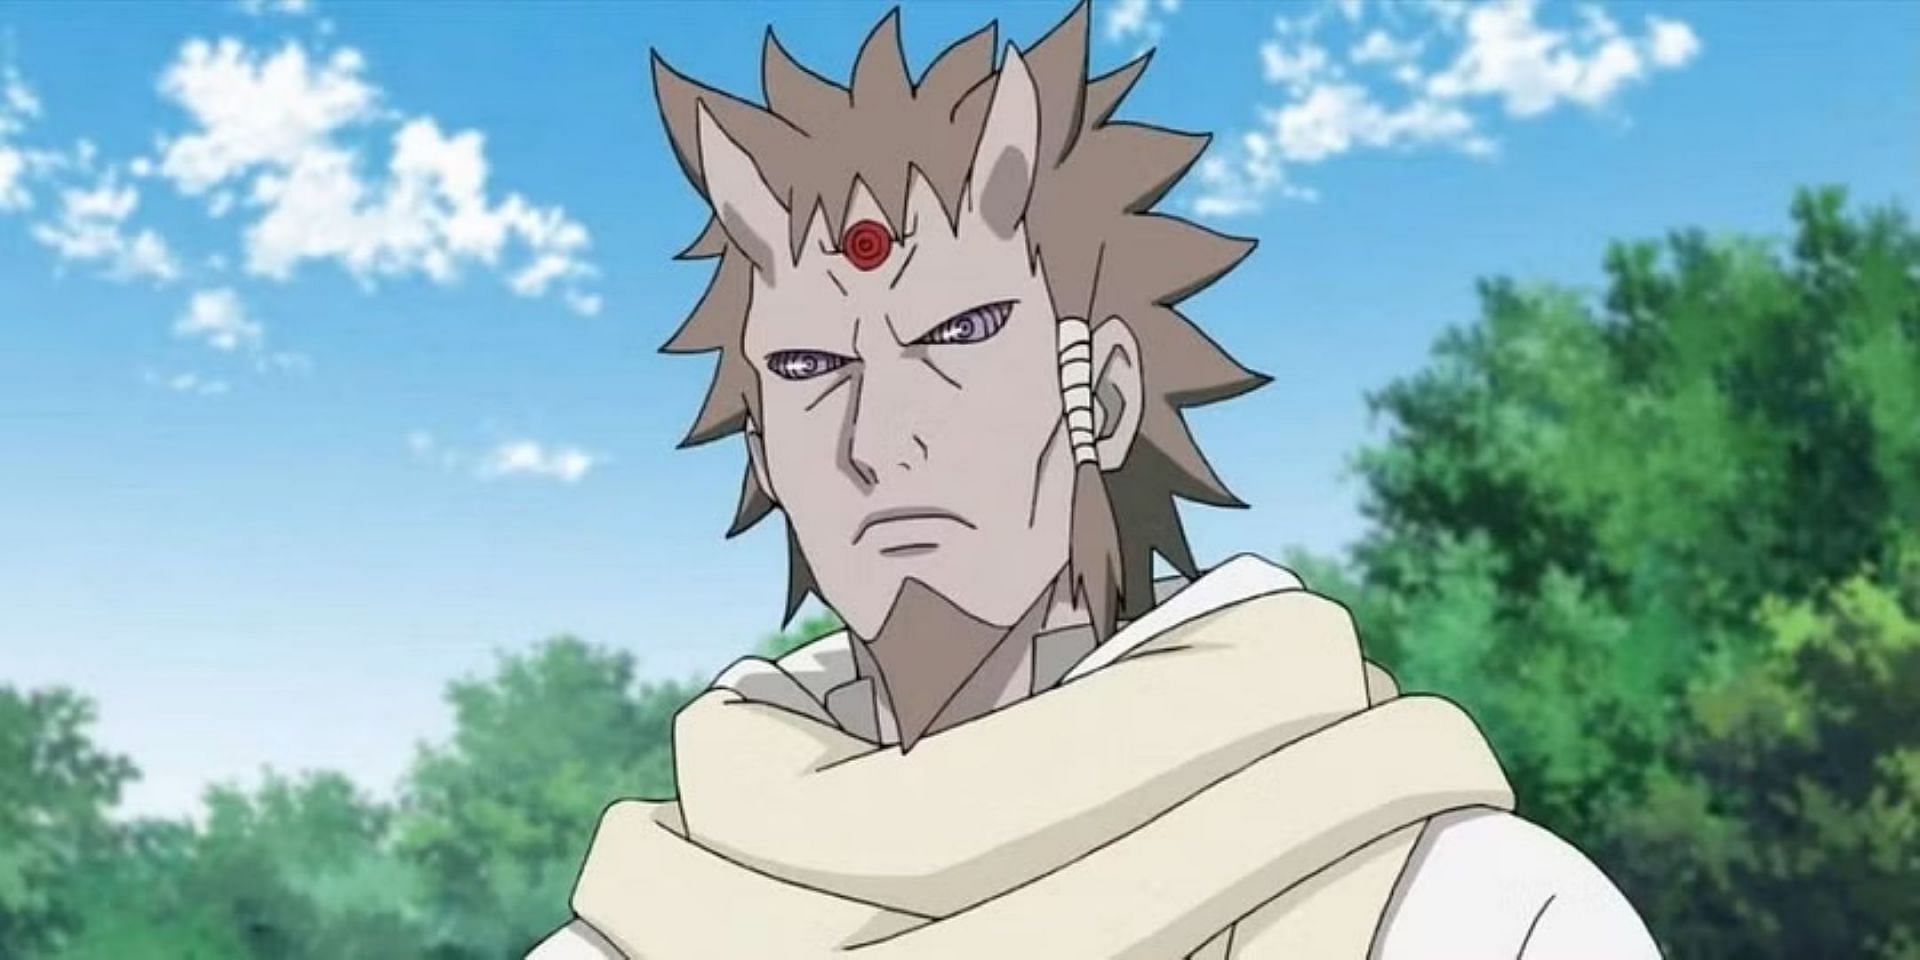 Hagoromo as seen in Naruto (Image via Pierrot)